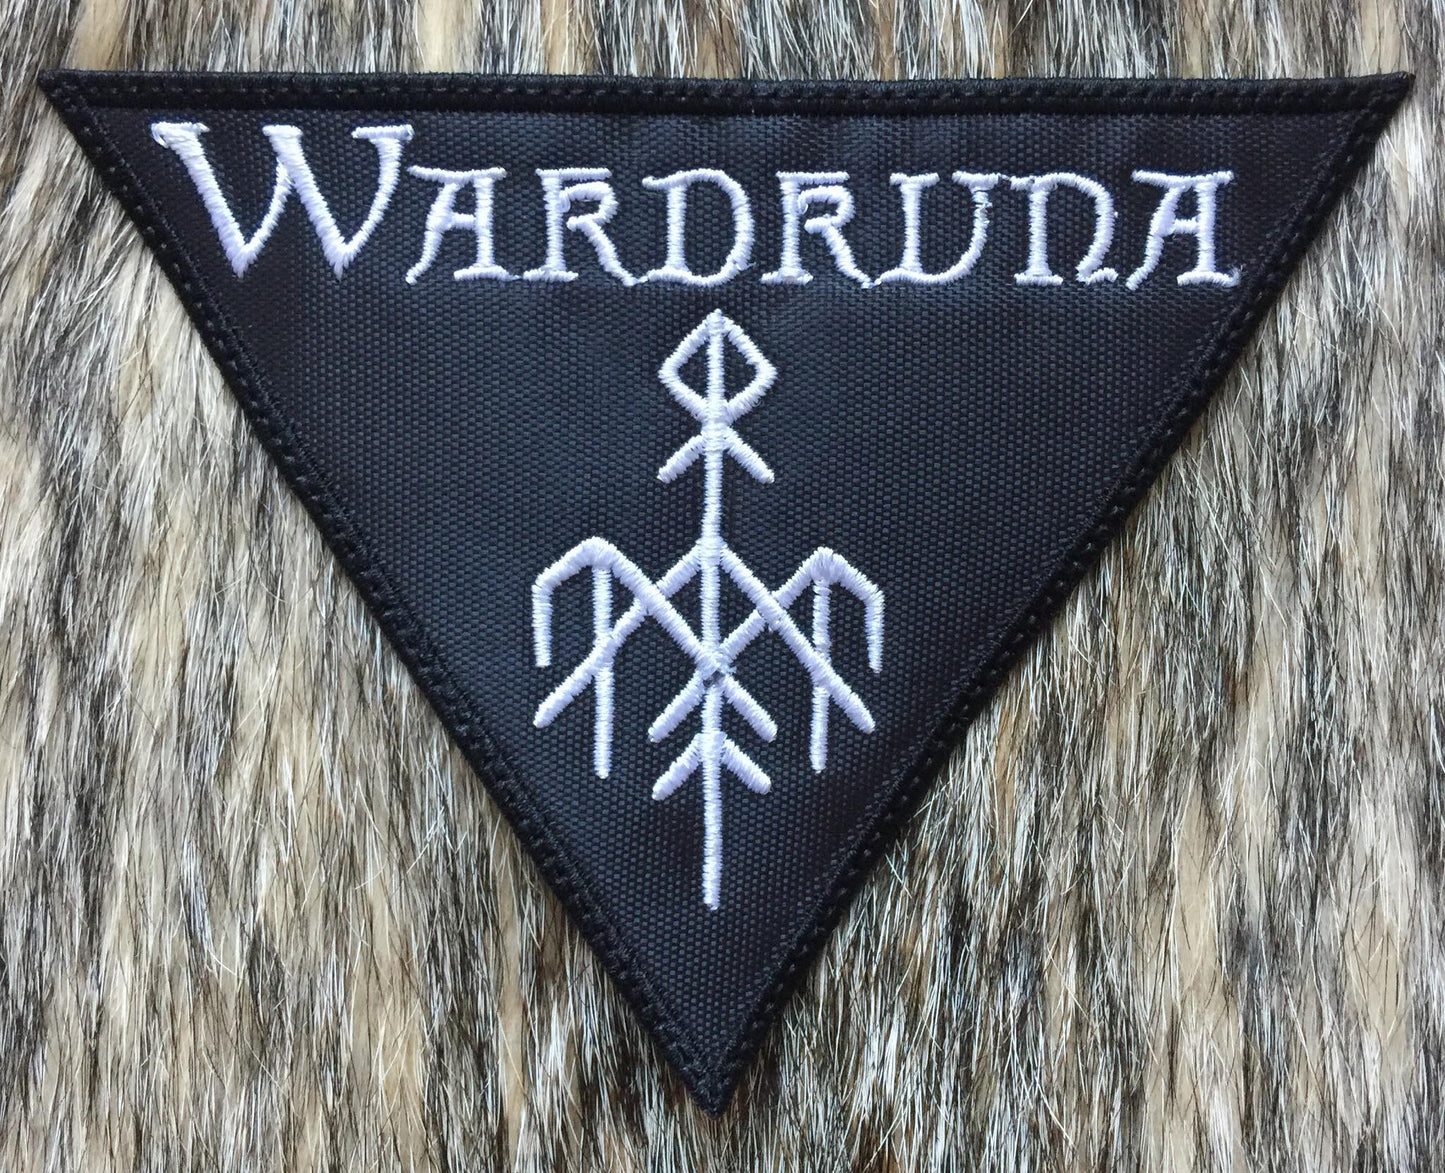 Wardruna - Logo Patch